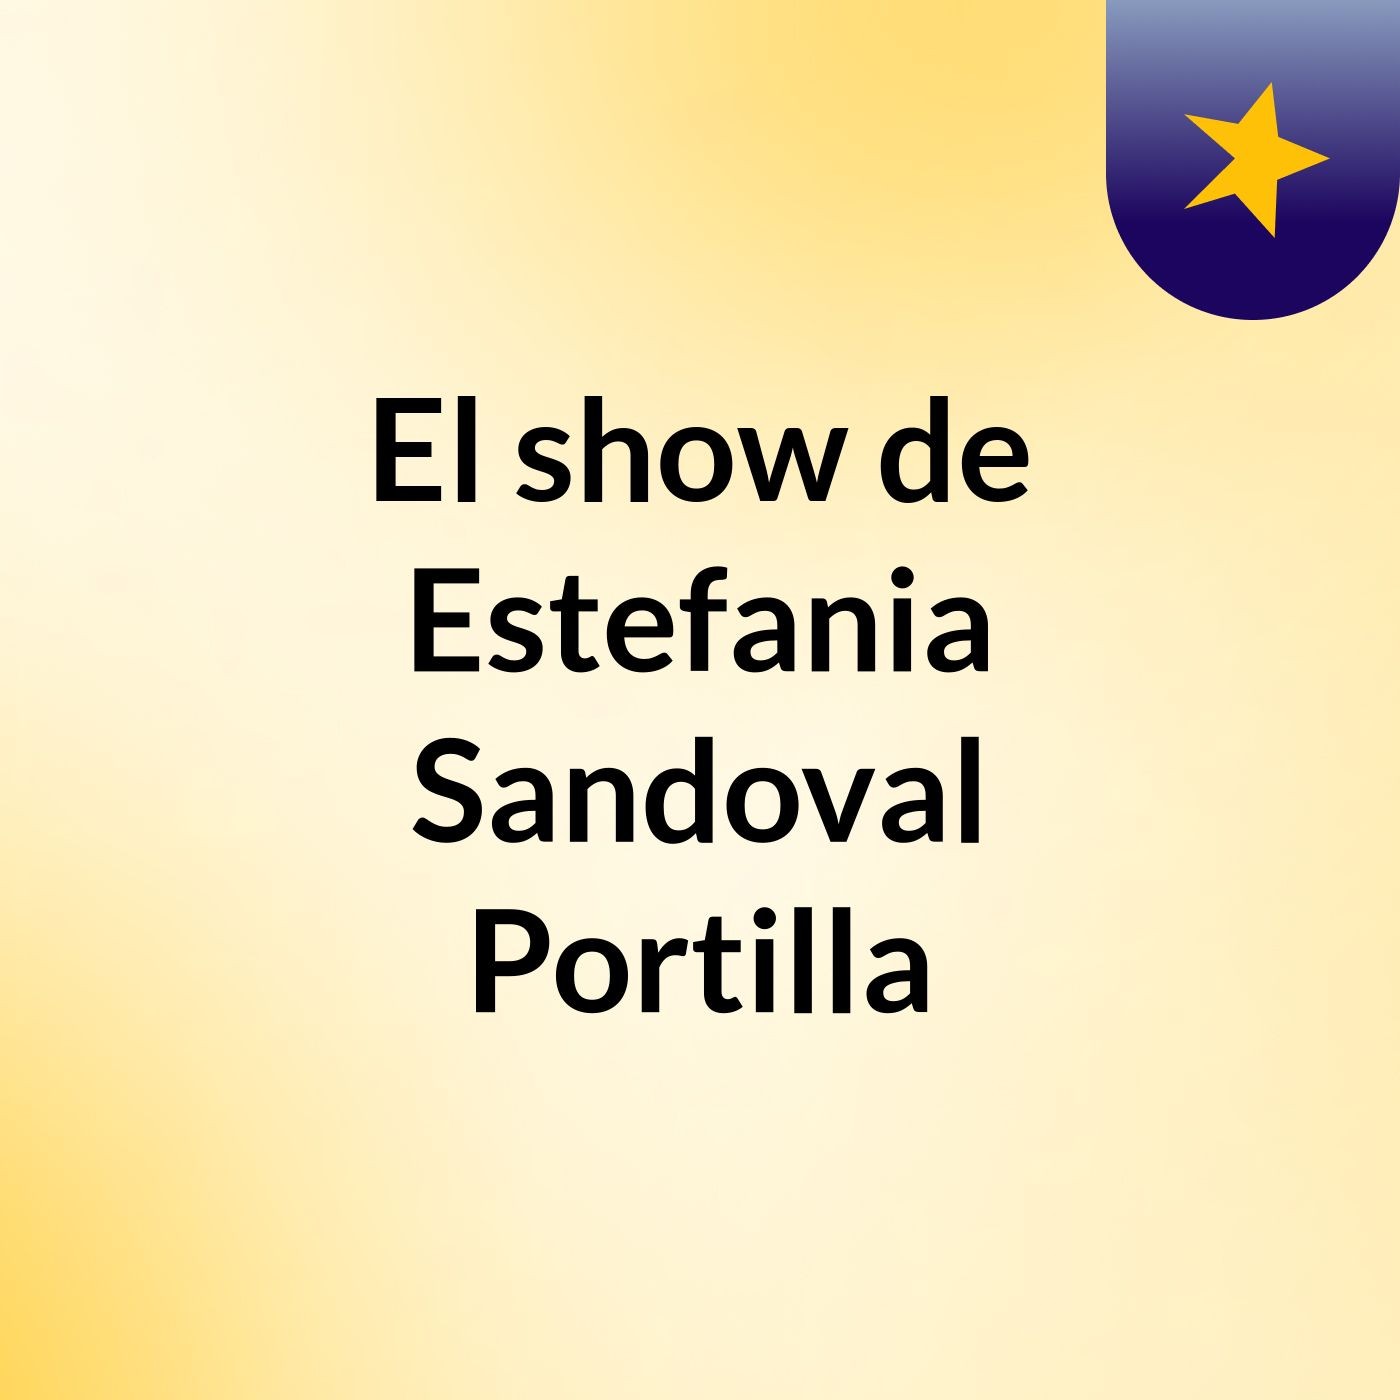 El show de Estefania Sandoval Portilla